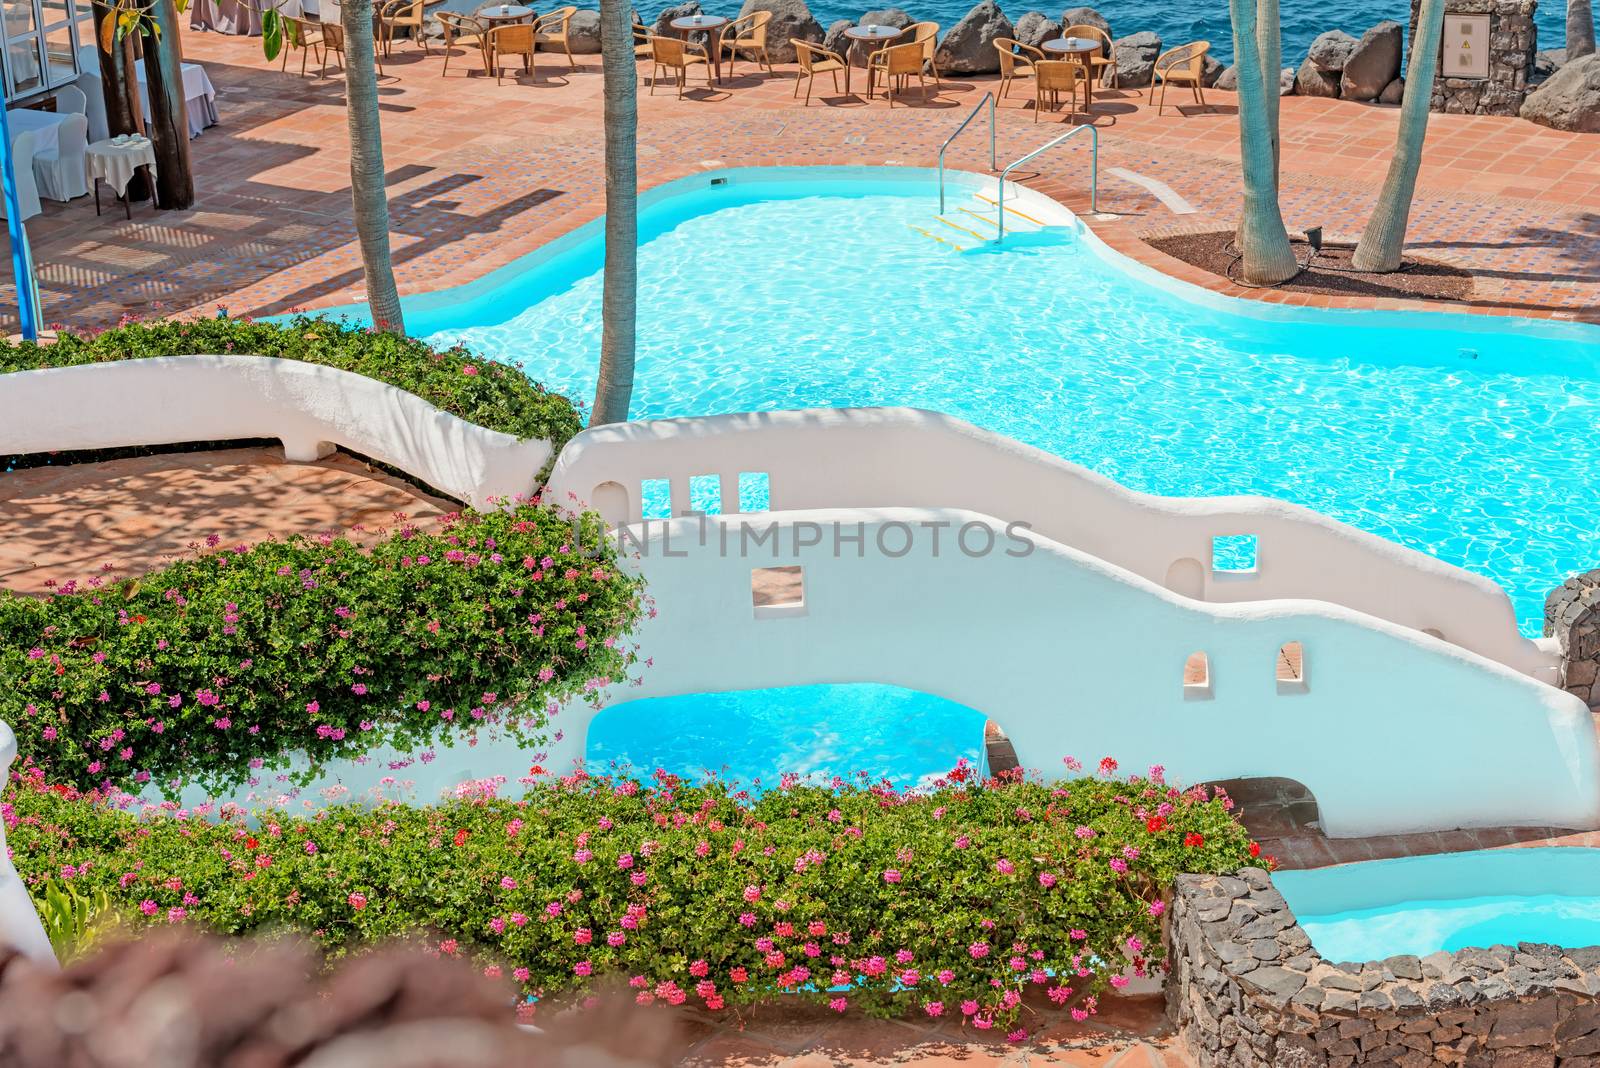 pool on tropical island by Nanisimova